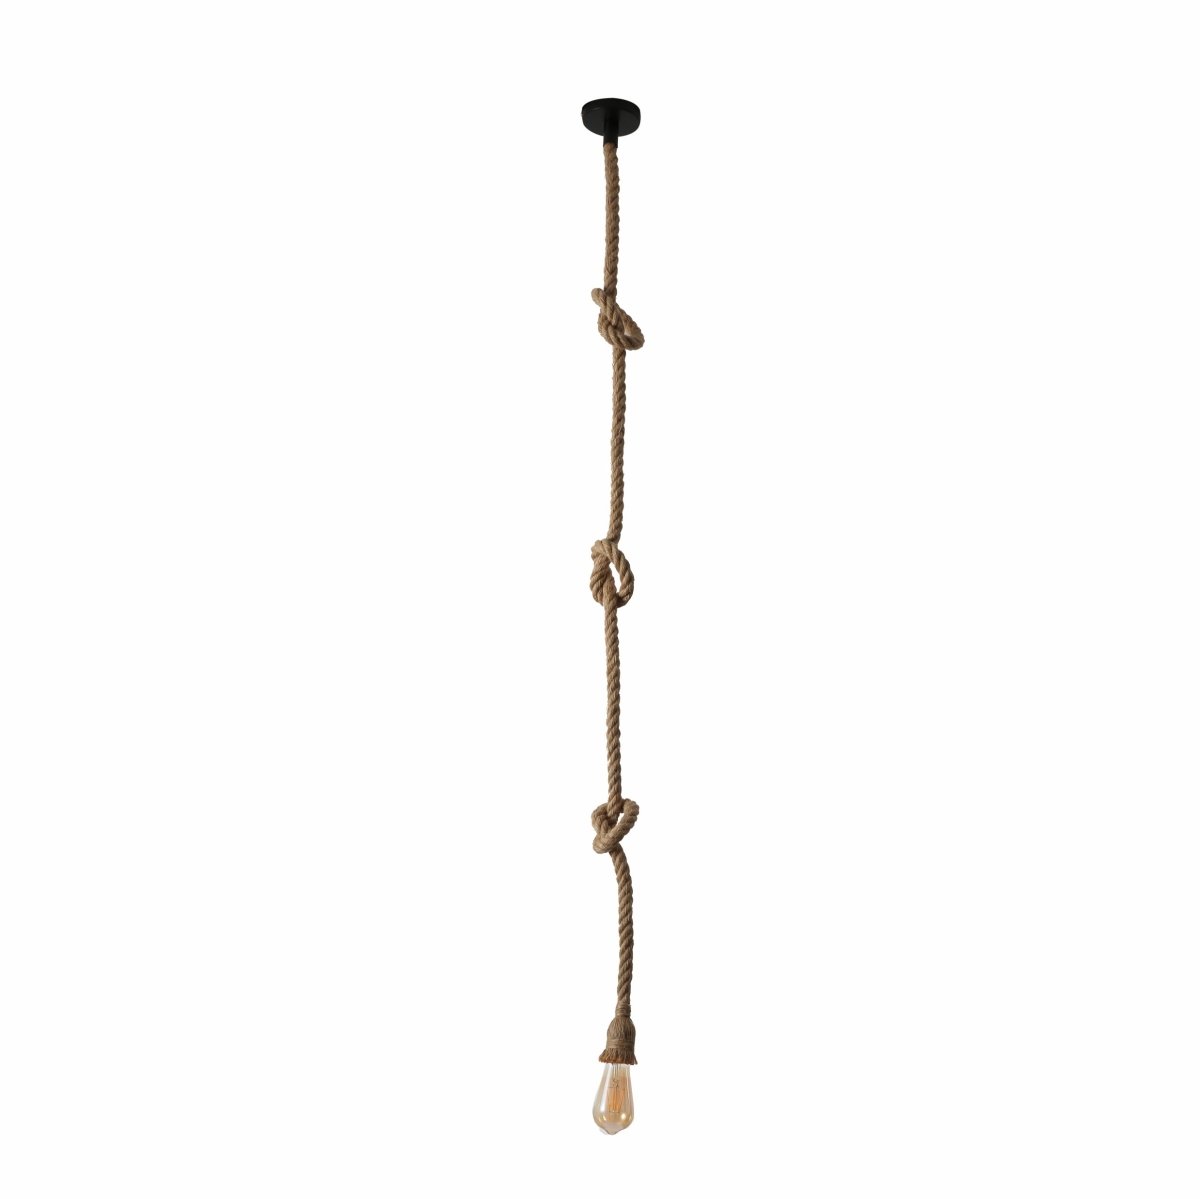 Main image of Hemp Rope Pendant Light with E27 Fitting 250cm | TEKLED 150-18402